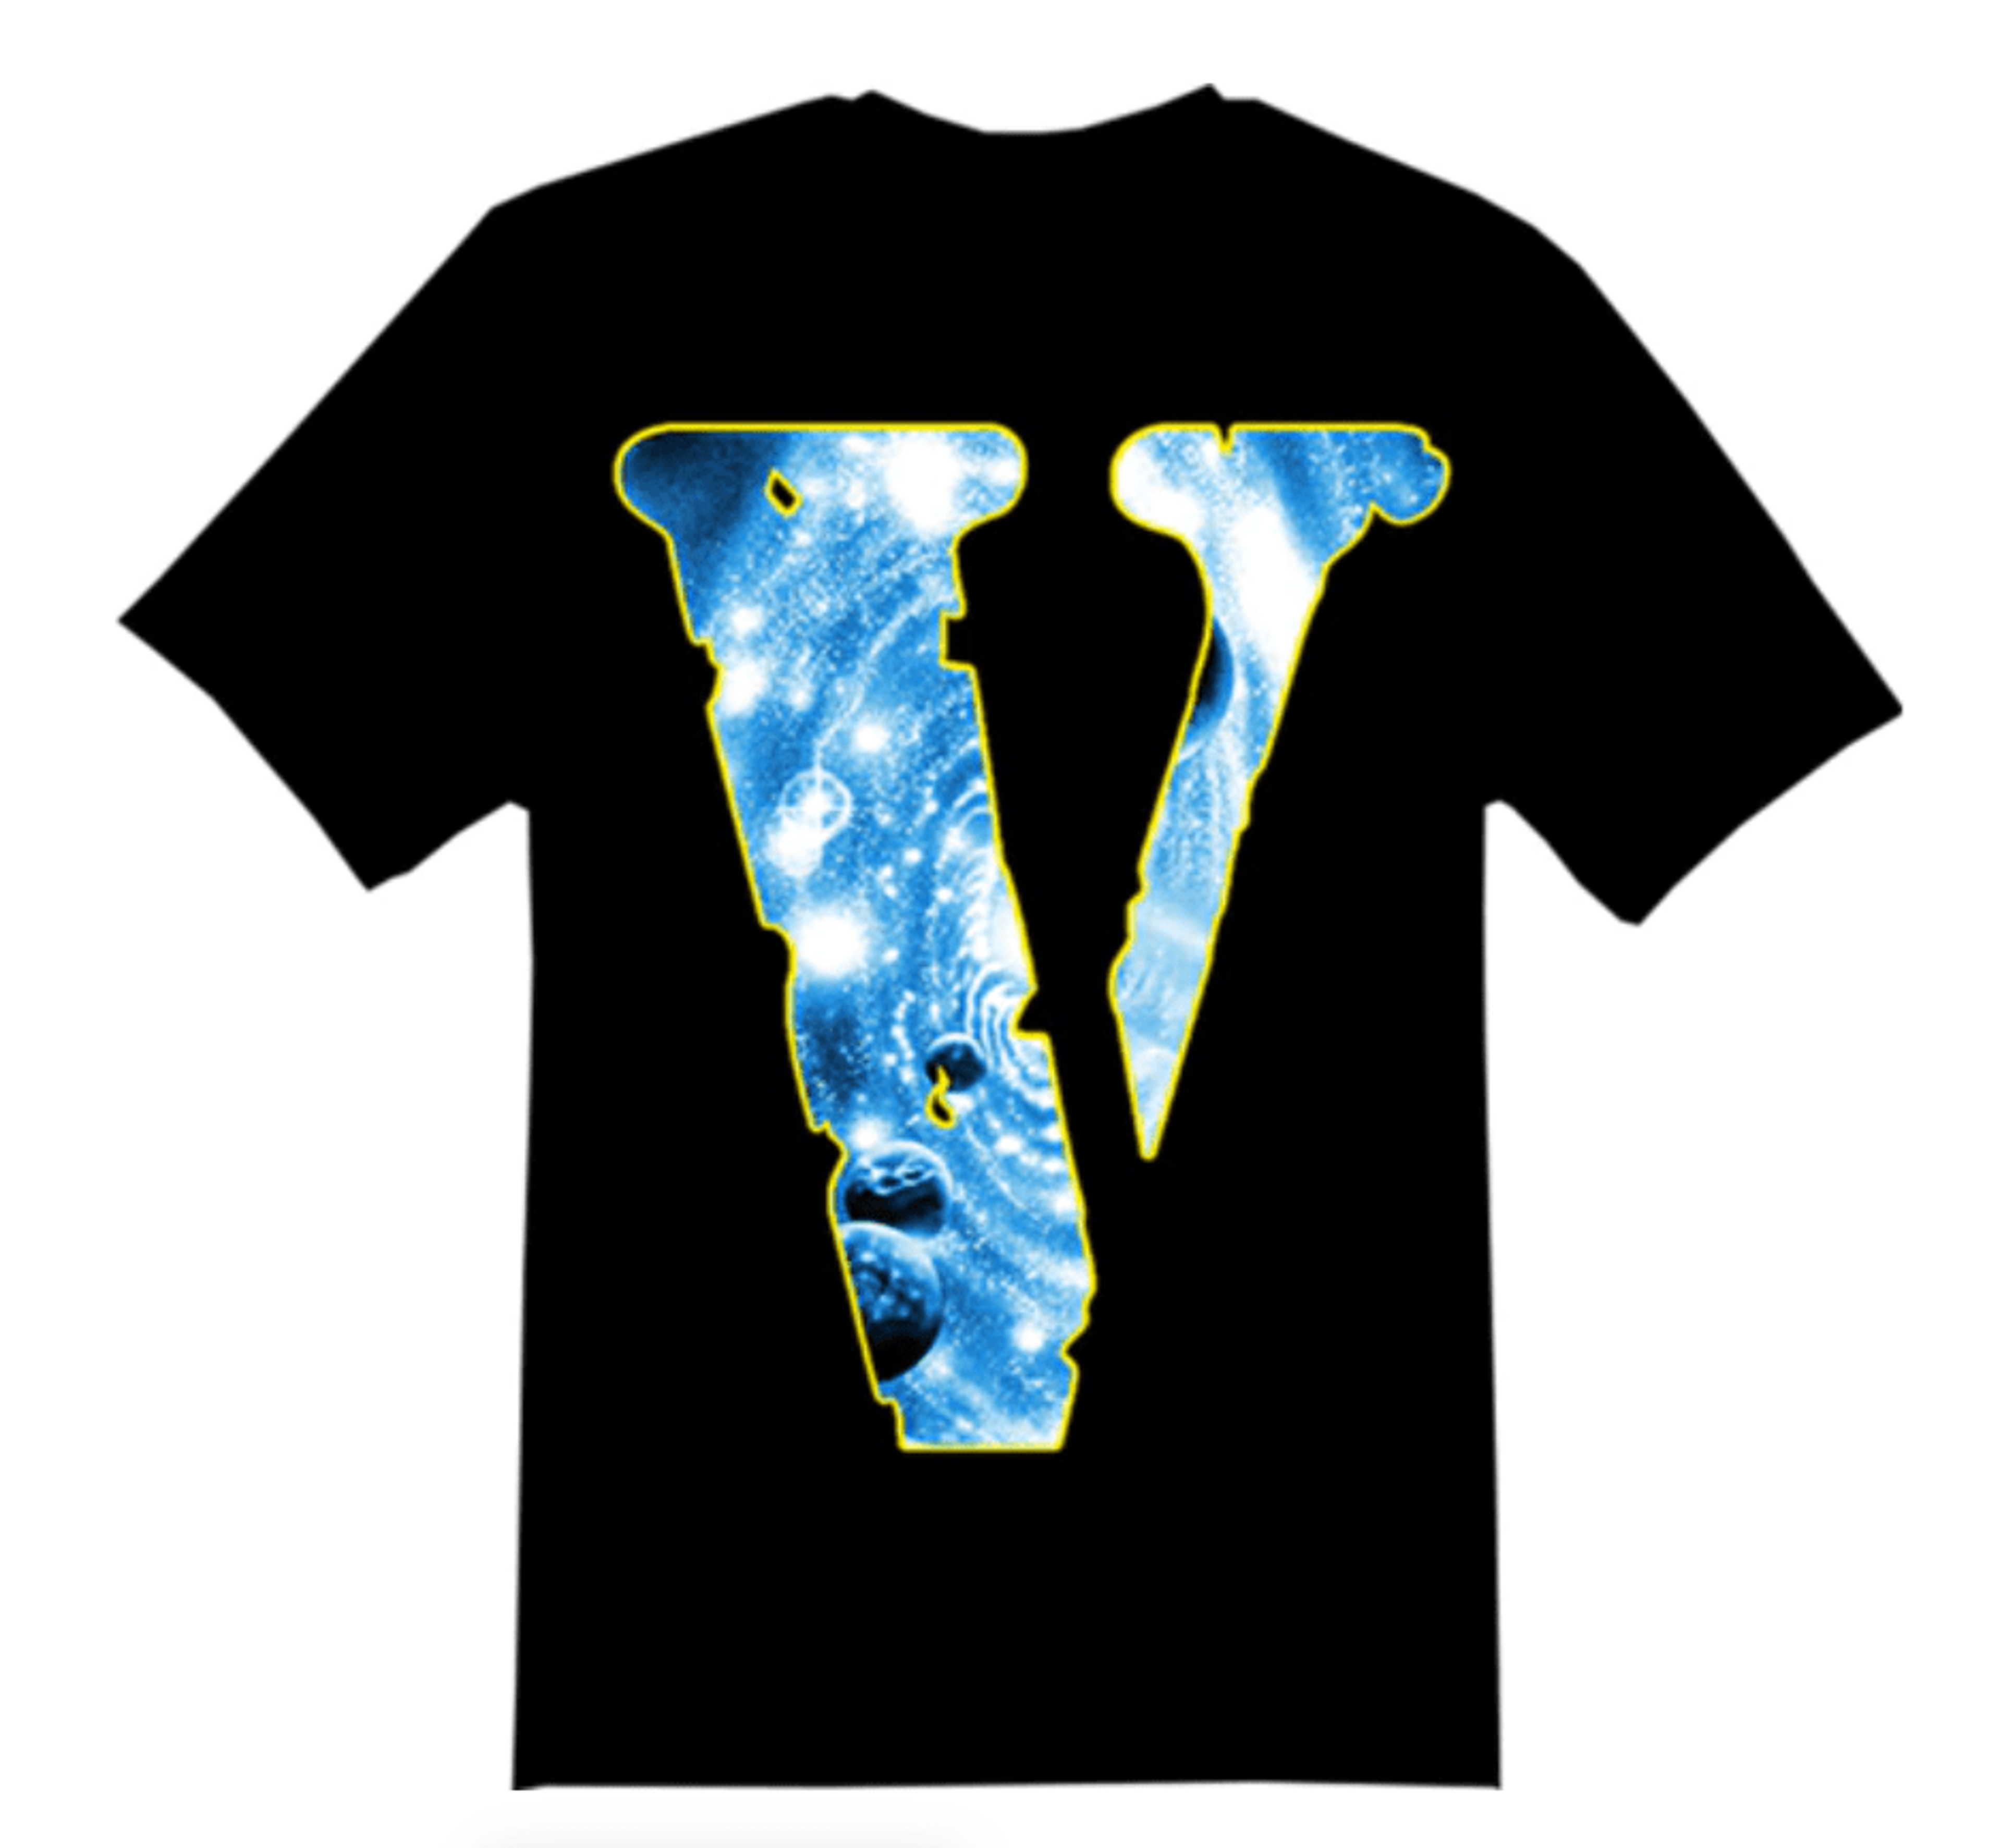 Alternate View 1 of Vlone x Juice Wrld Cosmic Racer Short Sleeve Tee Shirt Black